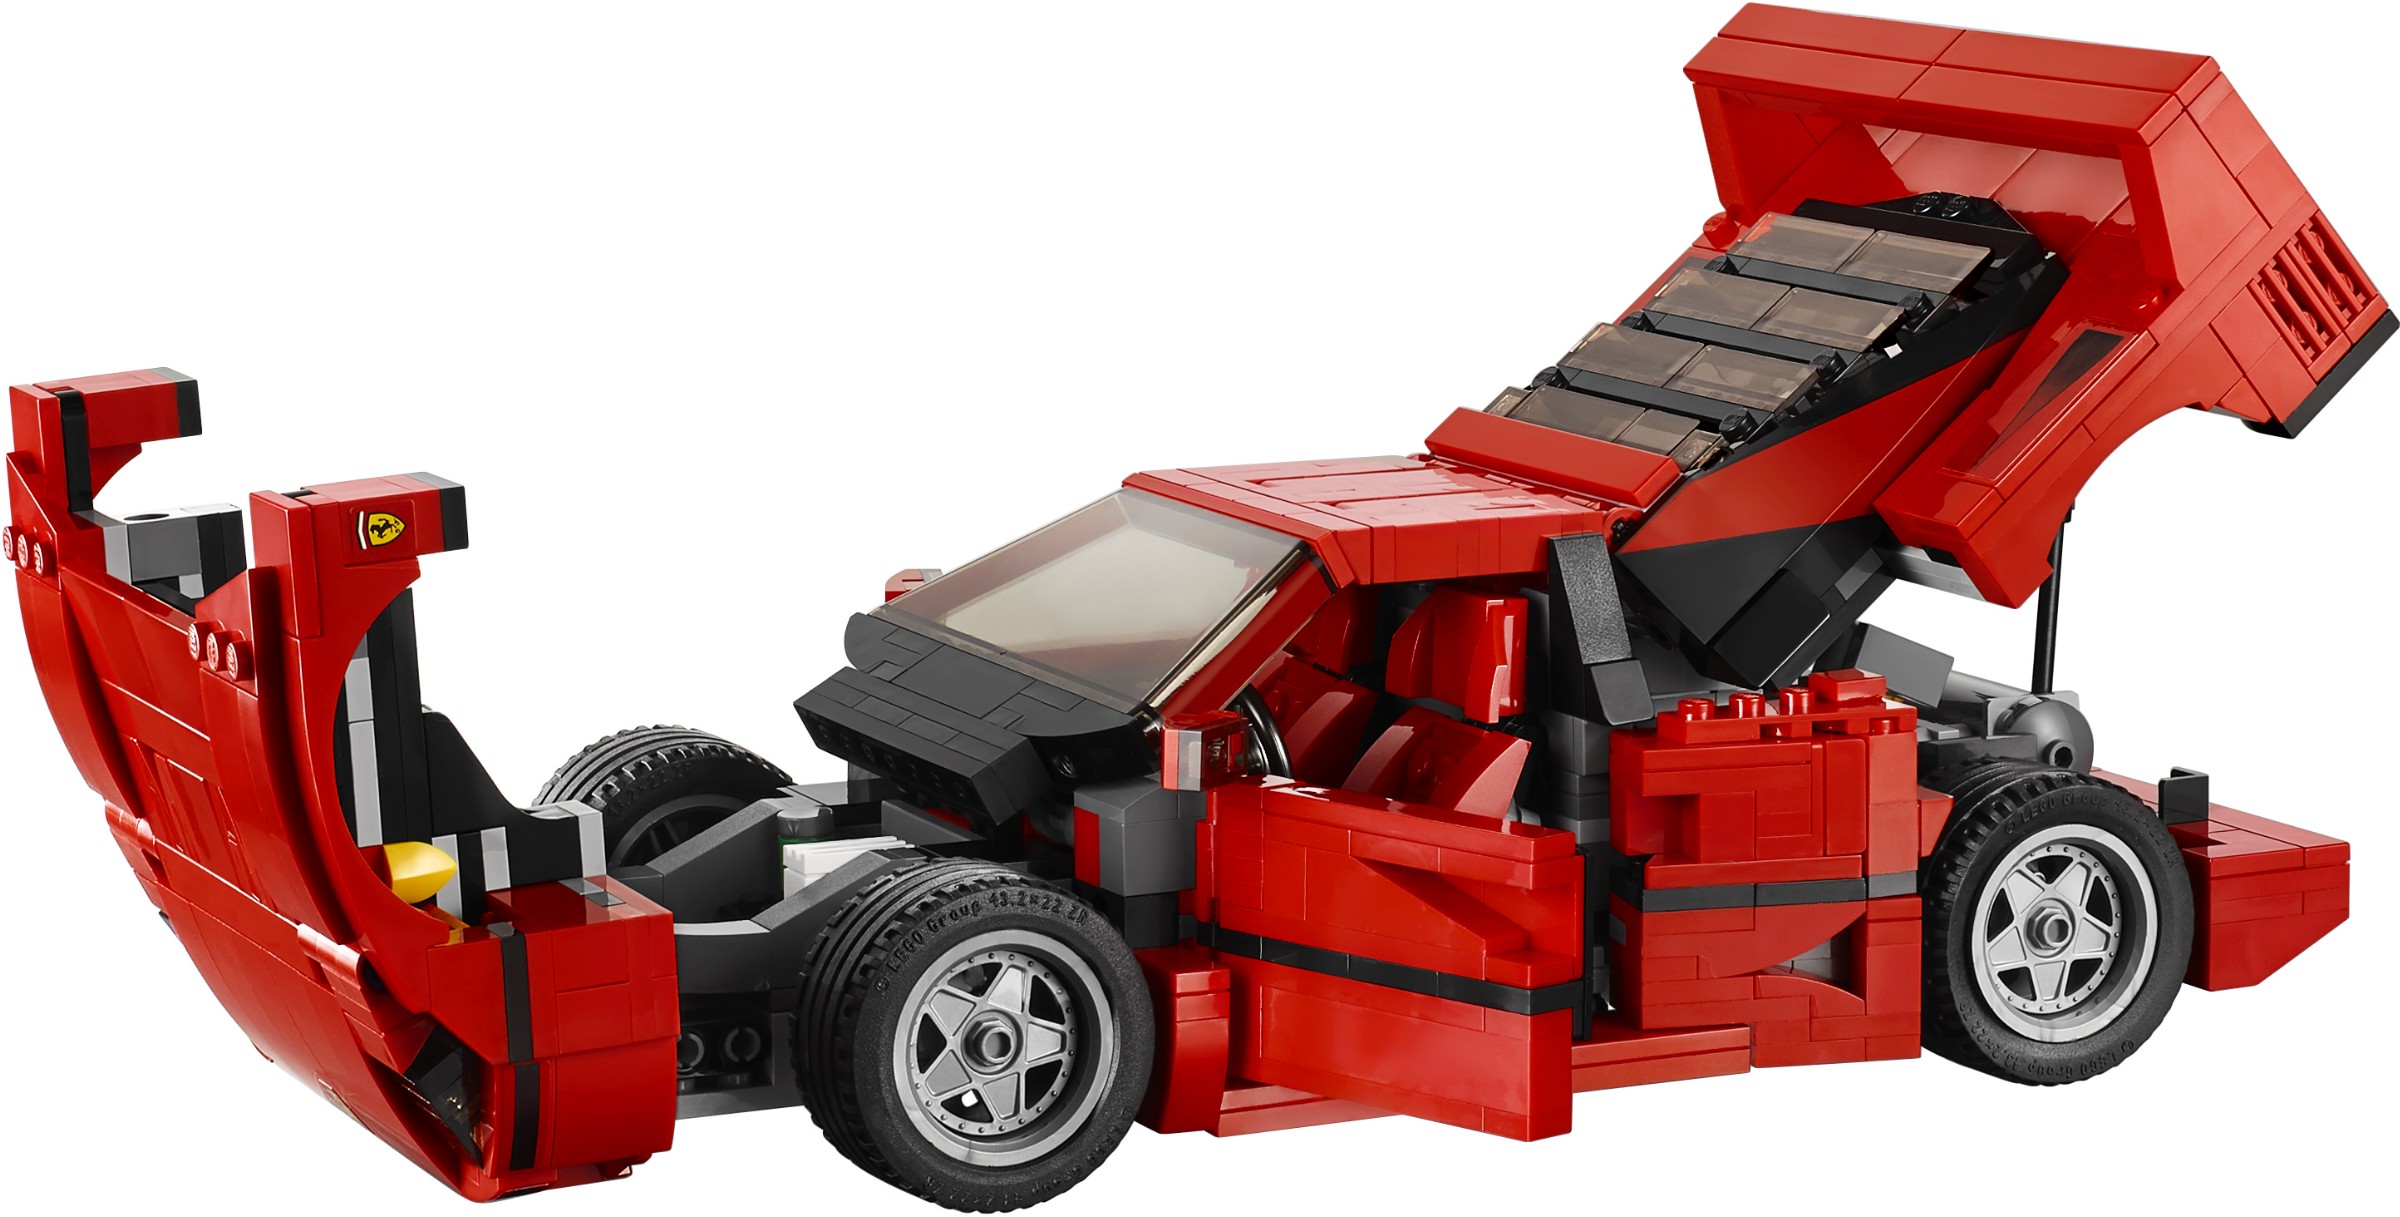 LEGO Creator Expert Ferrari F40 10248 Construction Set